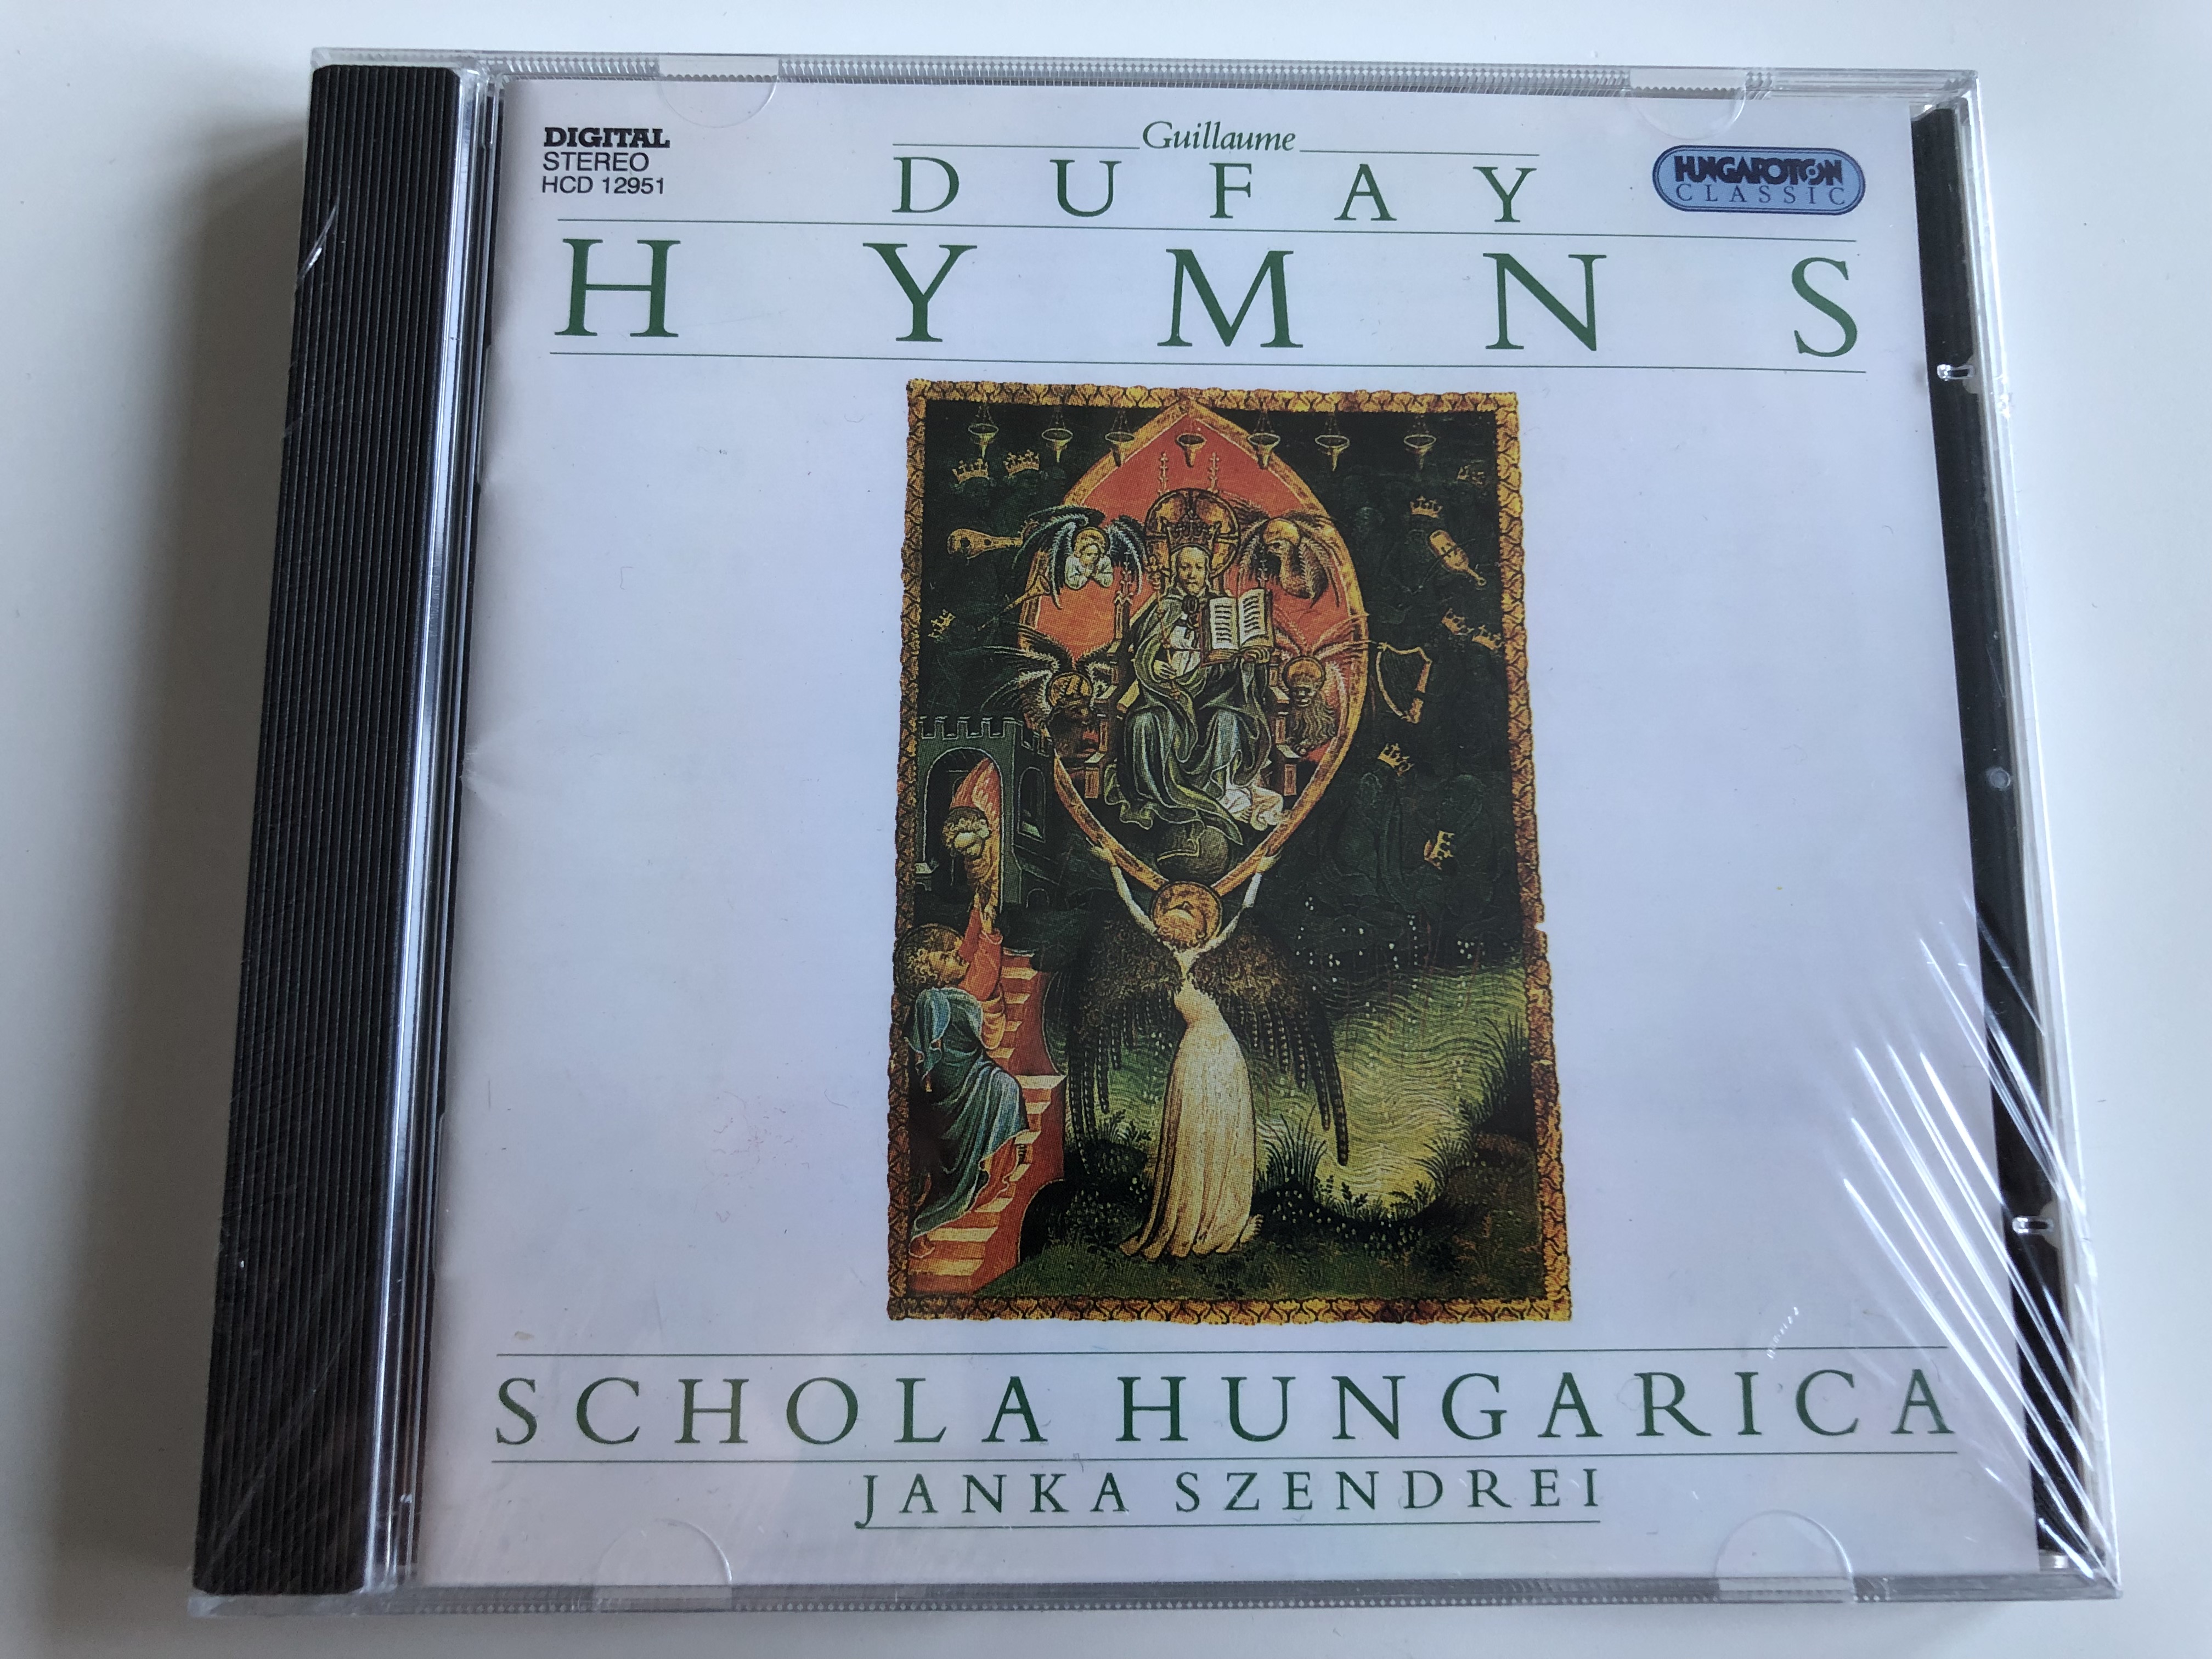 guillaume-dufay-hymns-schola-hungarica-janka-szendrei-hungaroton-classic-audio-cd-1995-stereo-hcd-12951-1-.jpg